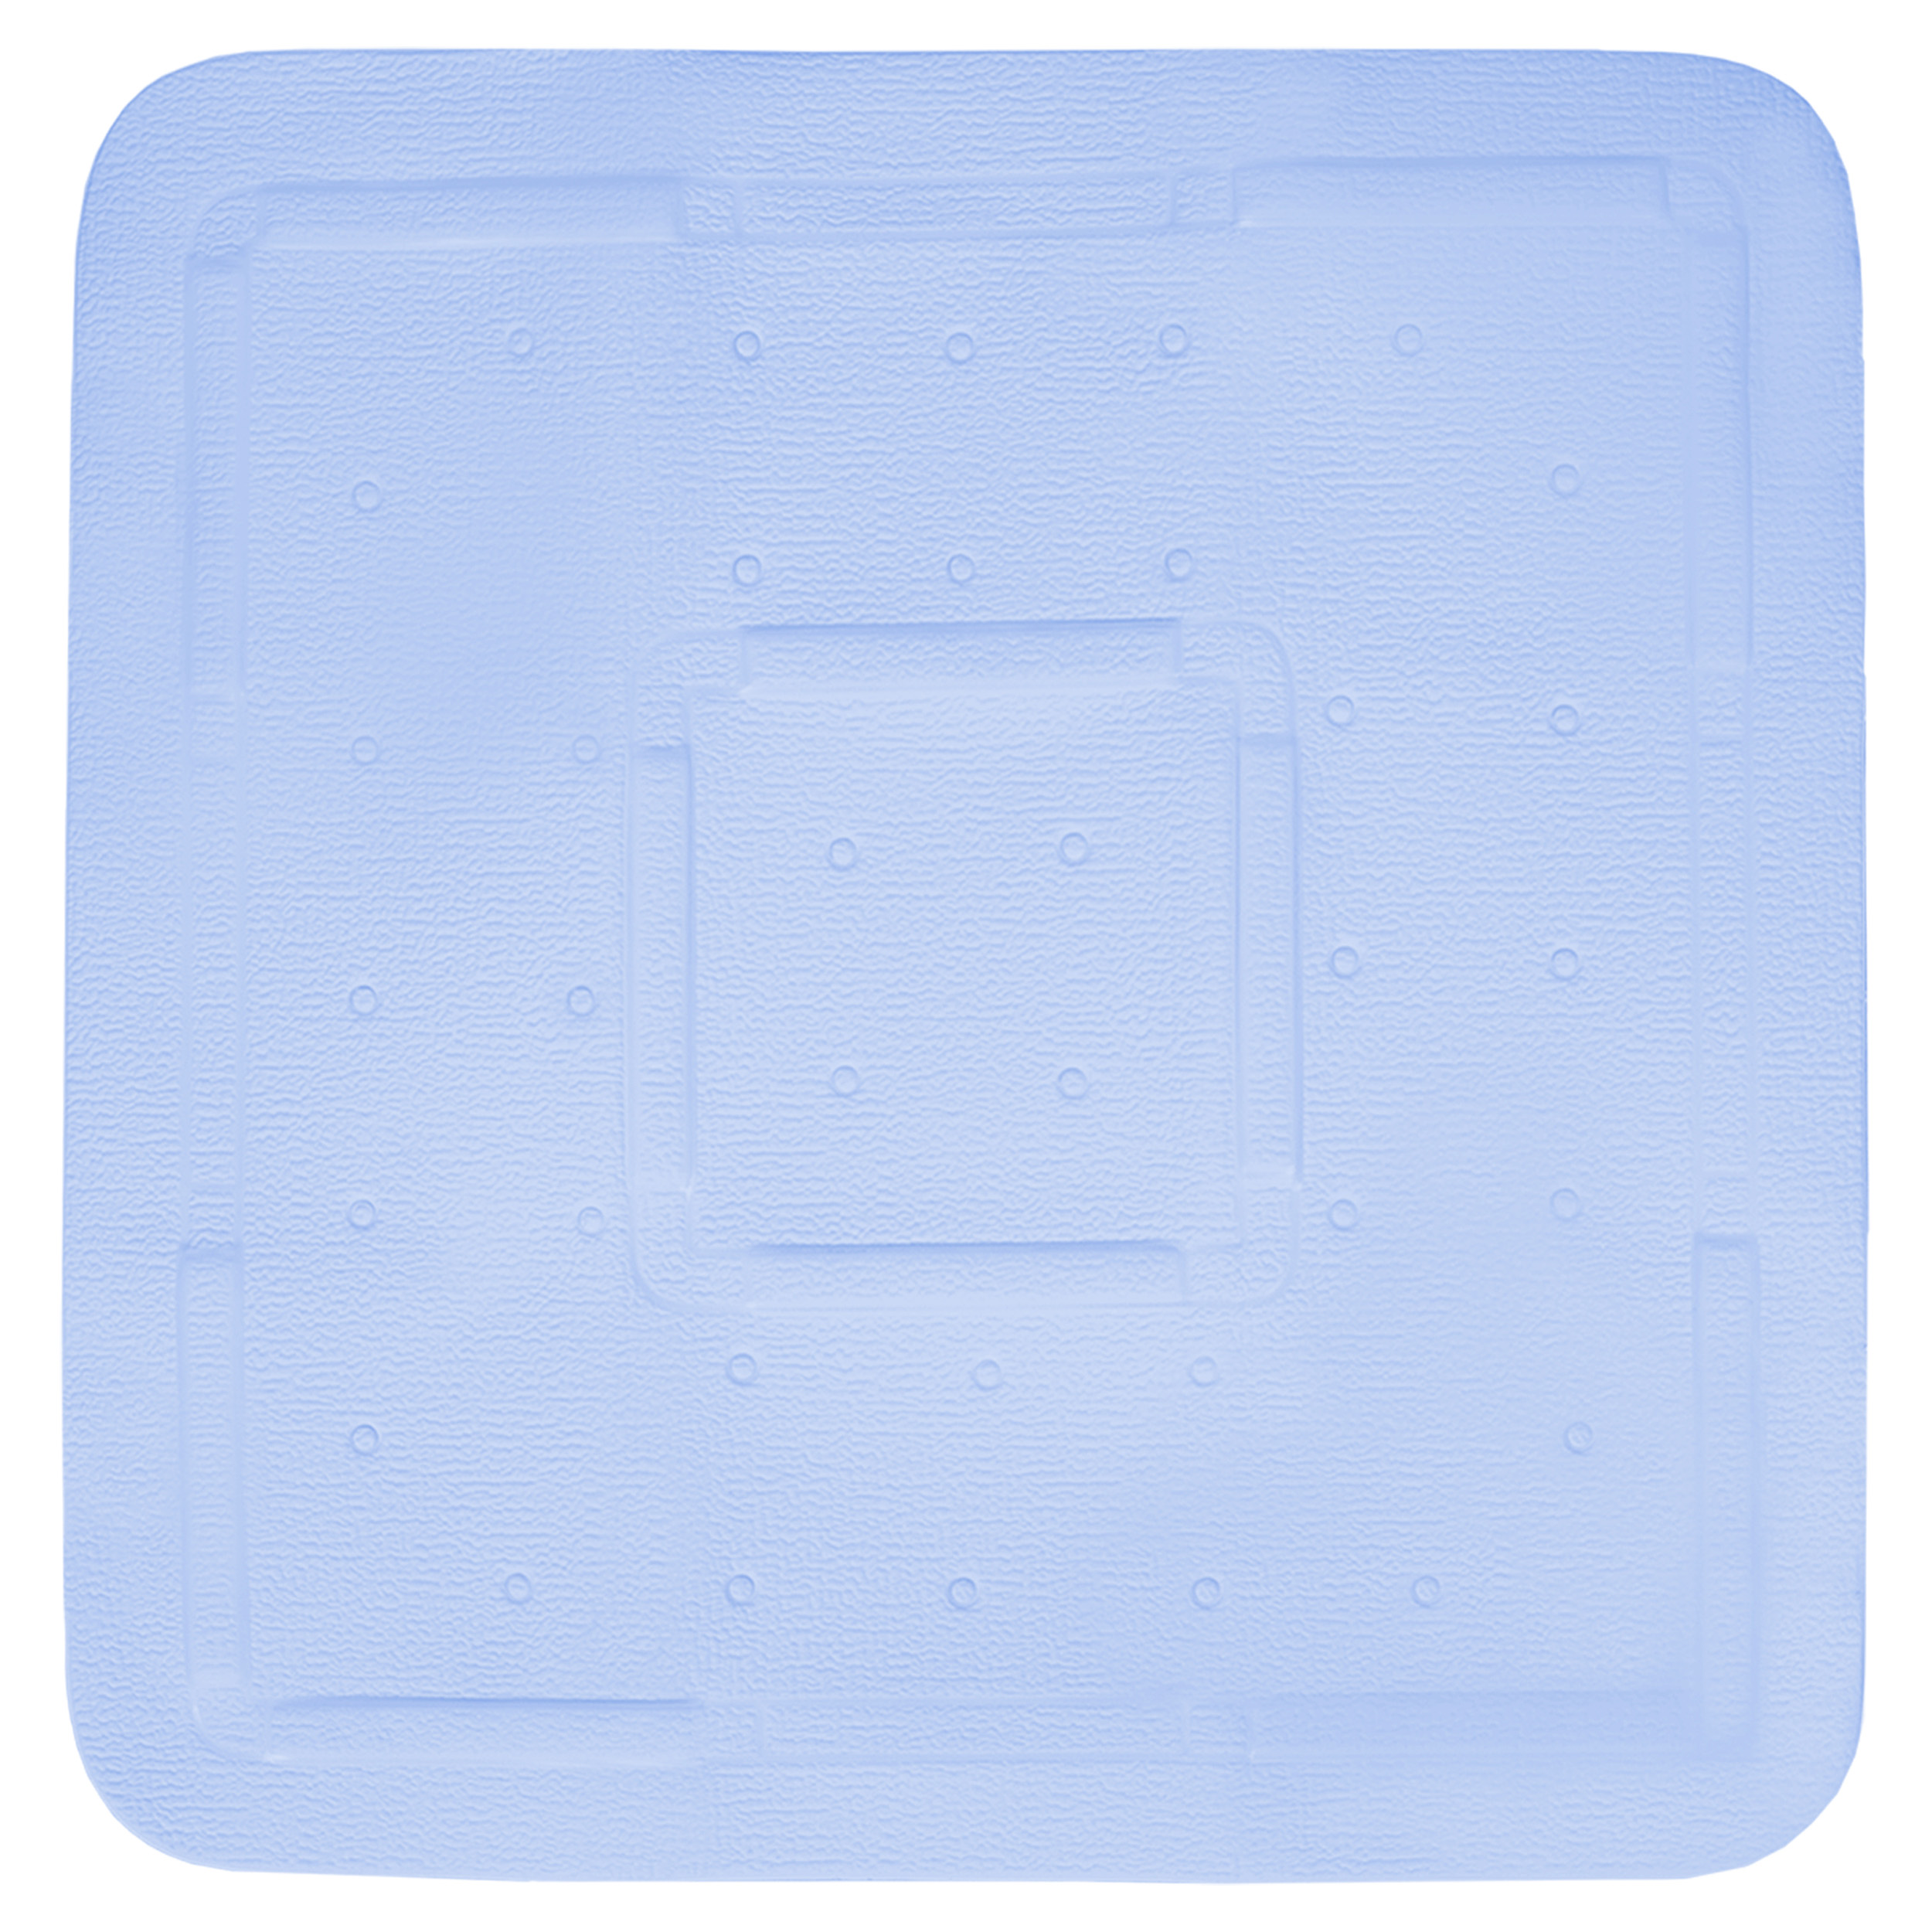 31.002.13 Differnz Tutus inlegmat douche - 100% PVC - anti-slip laag - 55 x 55 cm - blauw